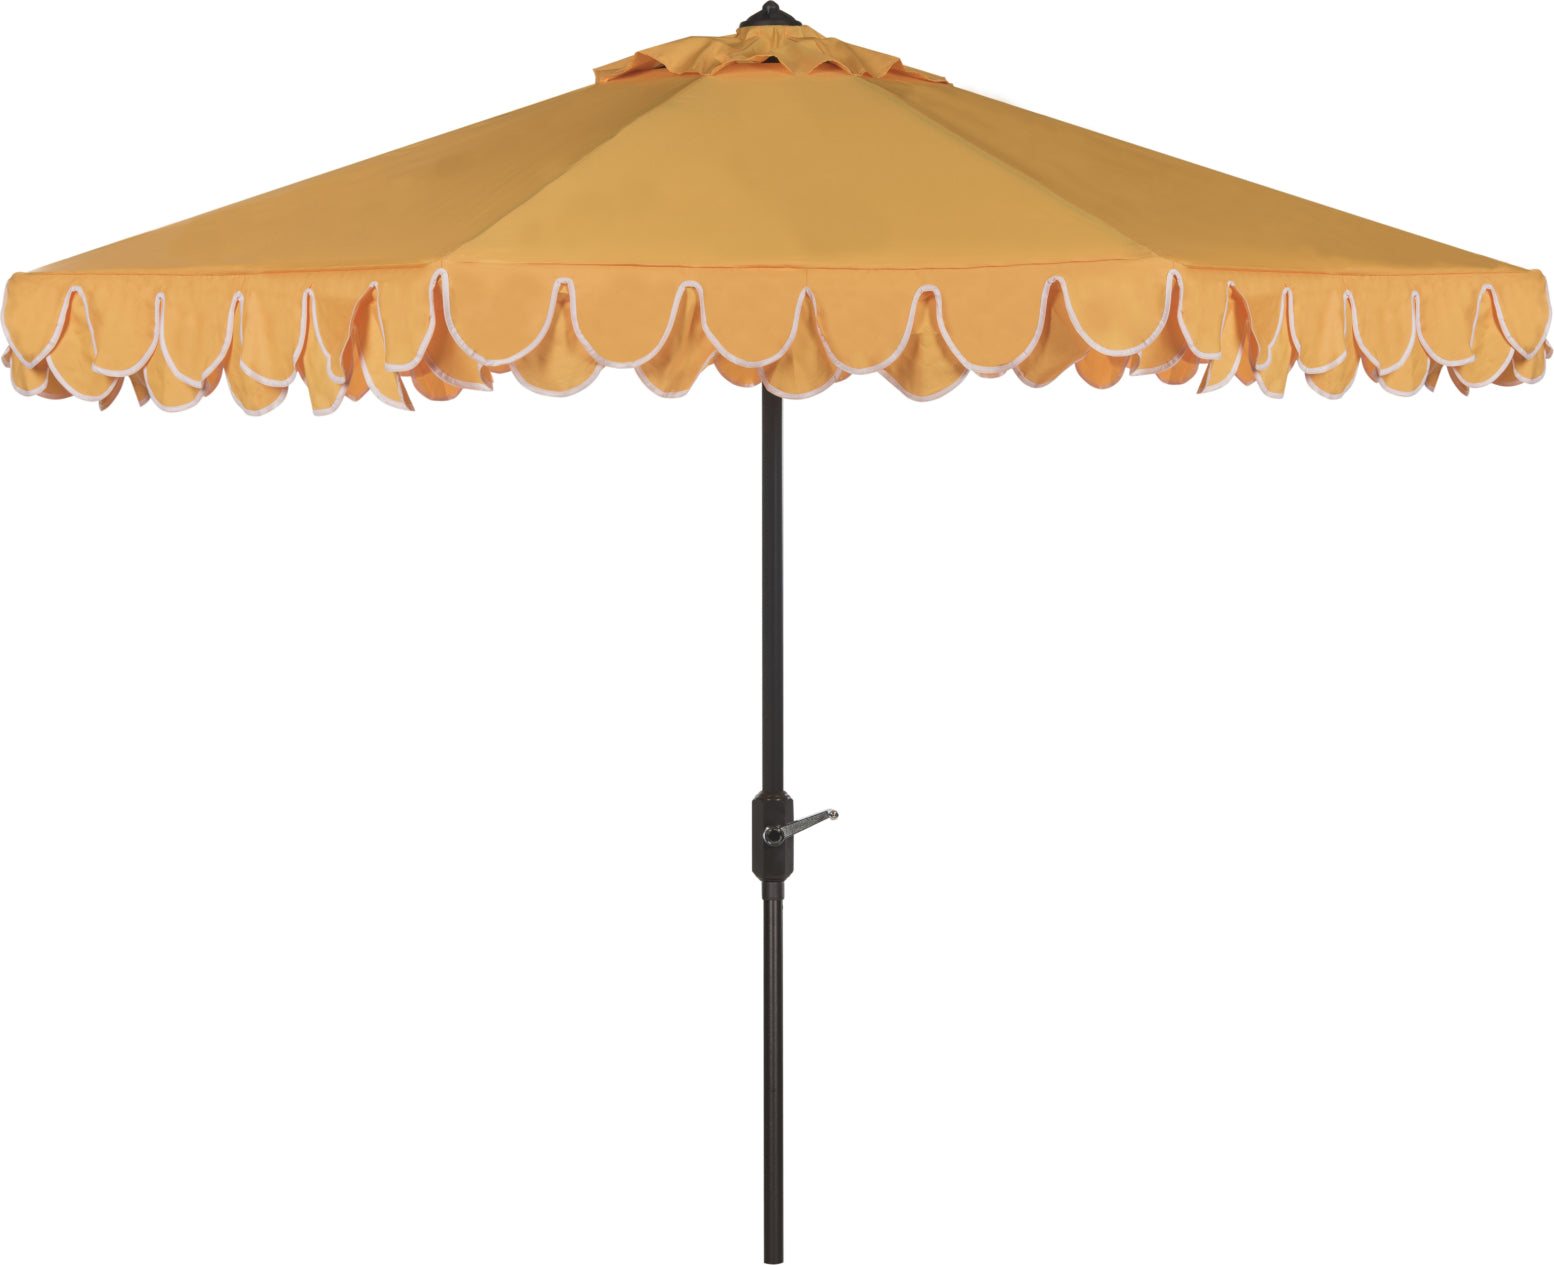 Safavieh Elegant Valance 9ft Auto Tilt Umbrella UV Resistant Yellow/White Furniture main image